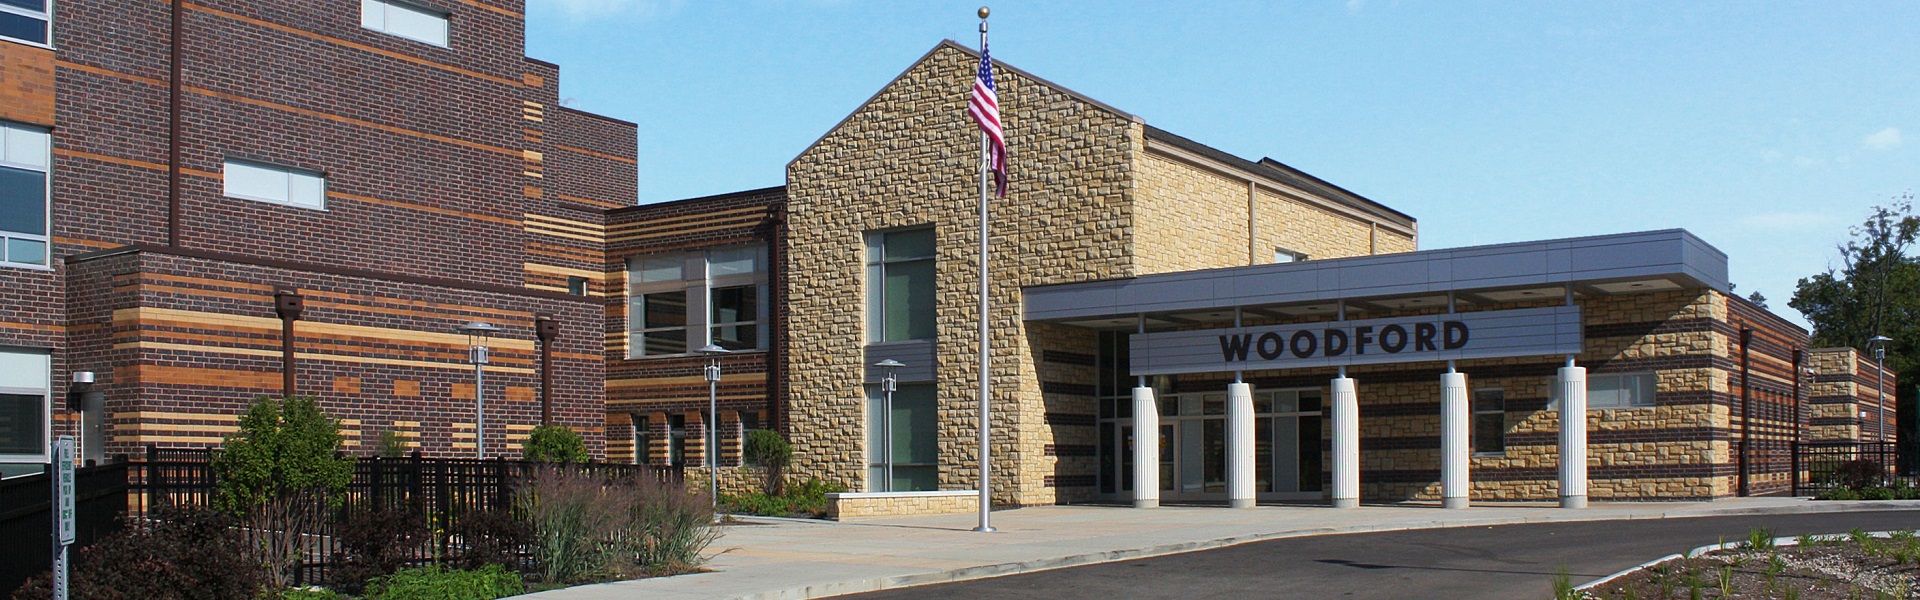 Woodford Elementary